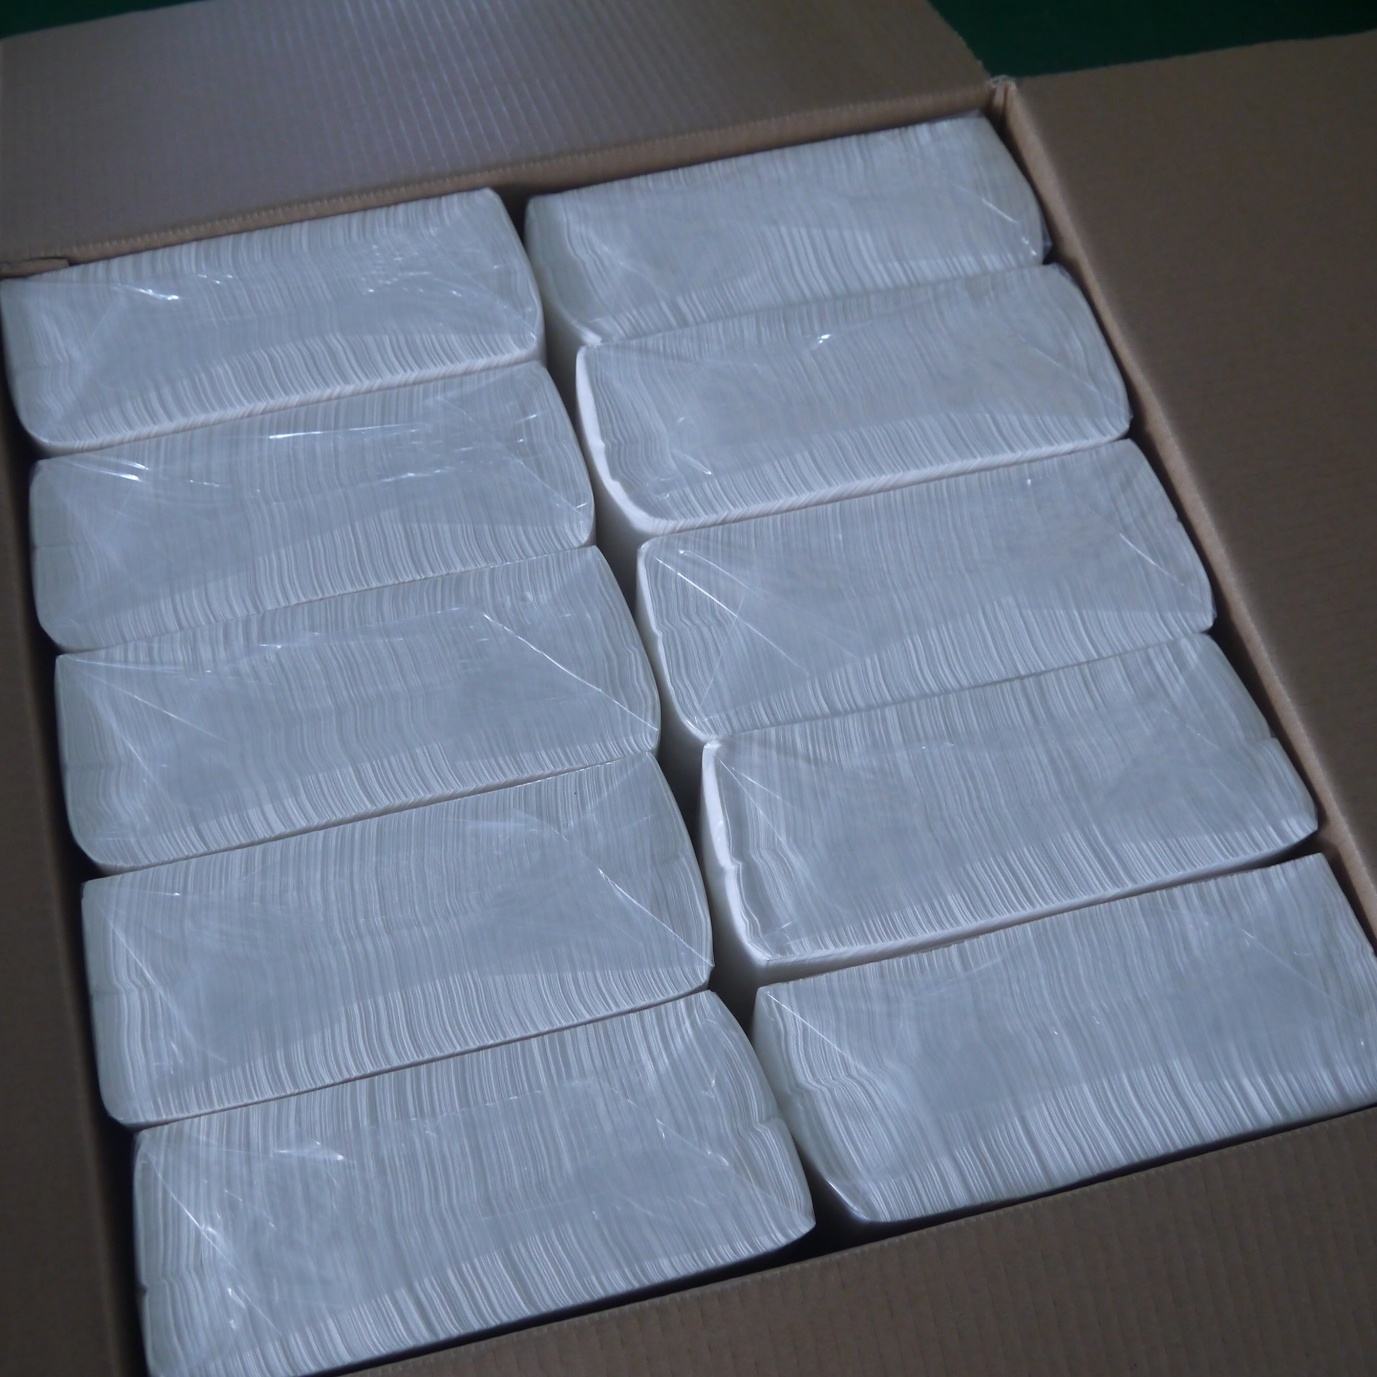 Interfold Paper Napkins OEM Embossing Folding Virgin soft napkin 2 ply